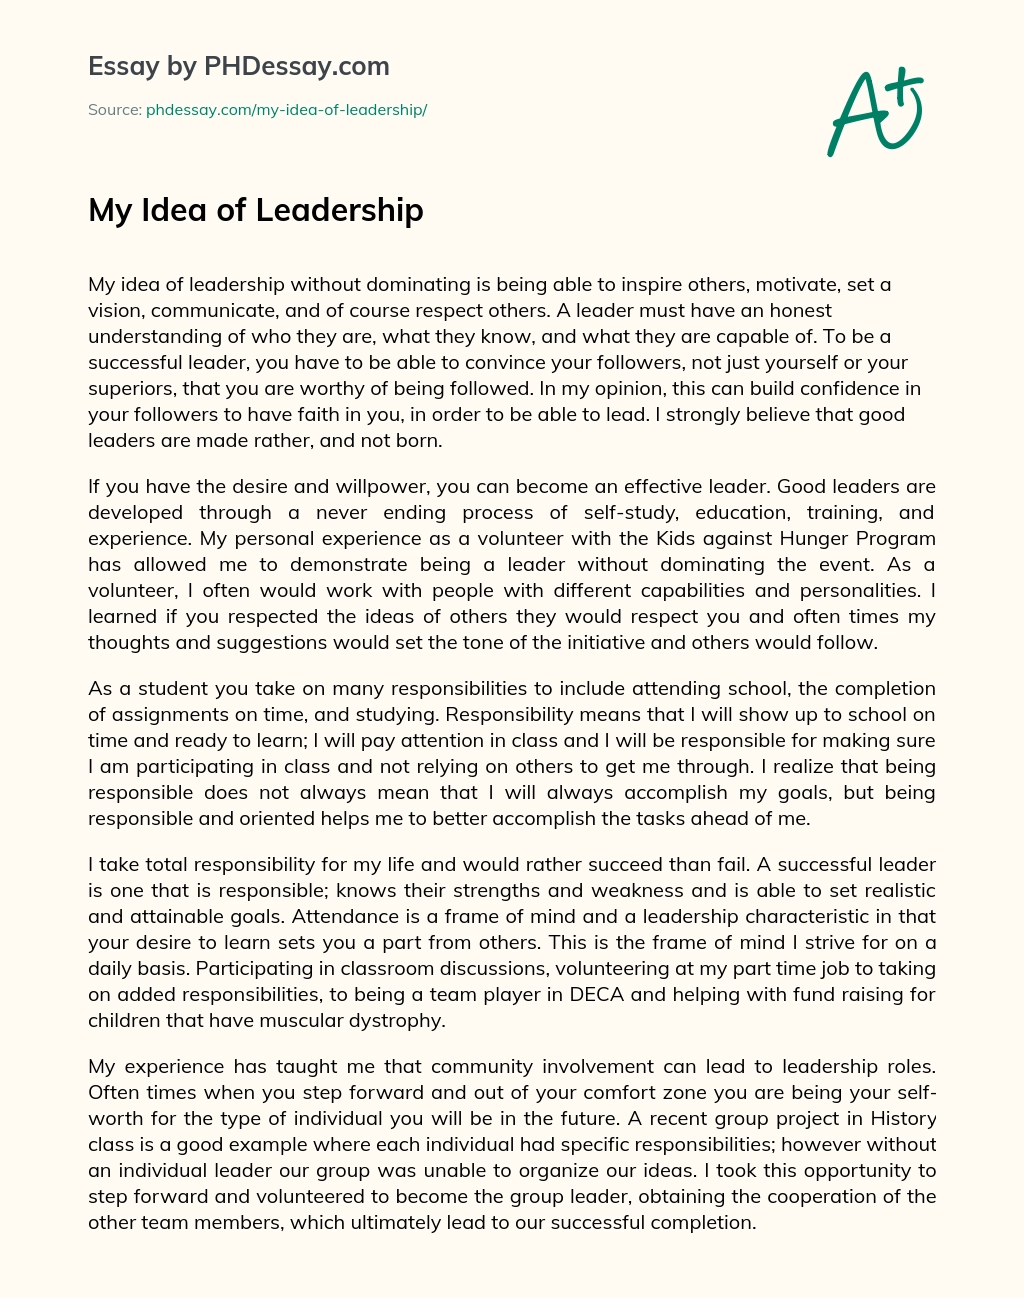 My Idea of Leadership essay